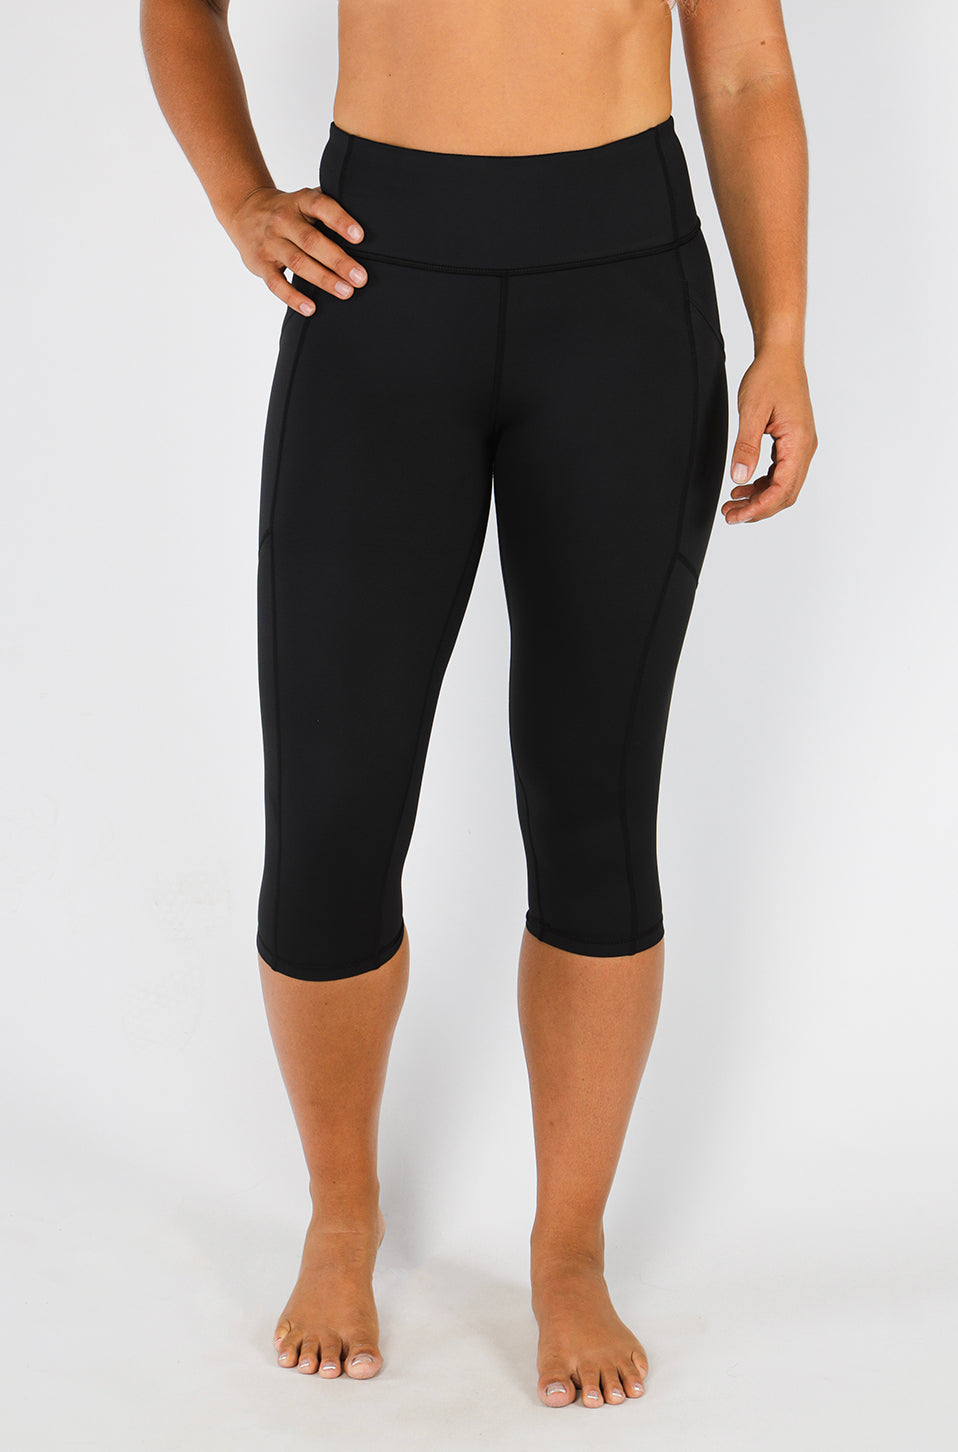 Amazon Athletic Wear:Capri Leggings - Cyndi Spivey | Cyndi spivey, Athletic  wear, Capri leggings